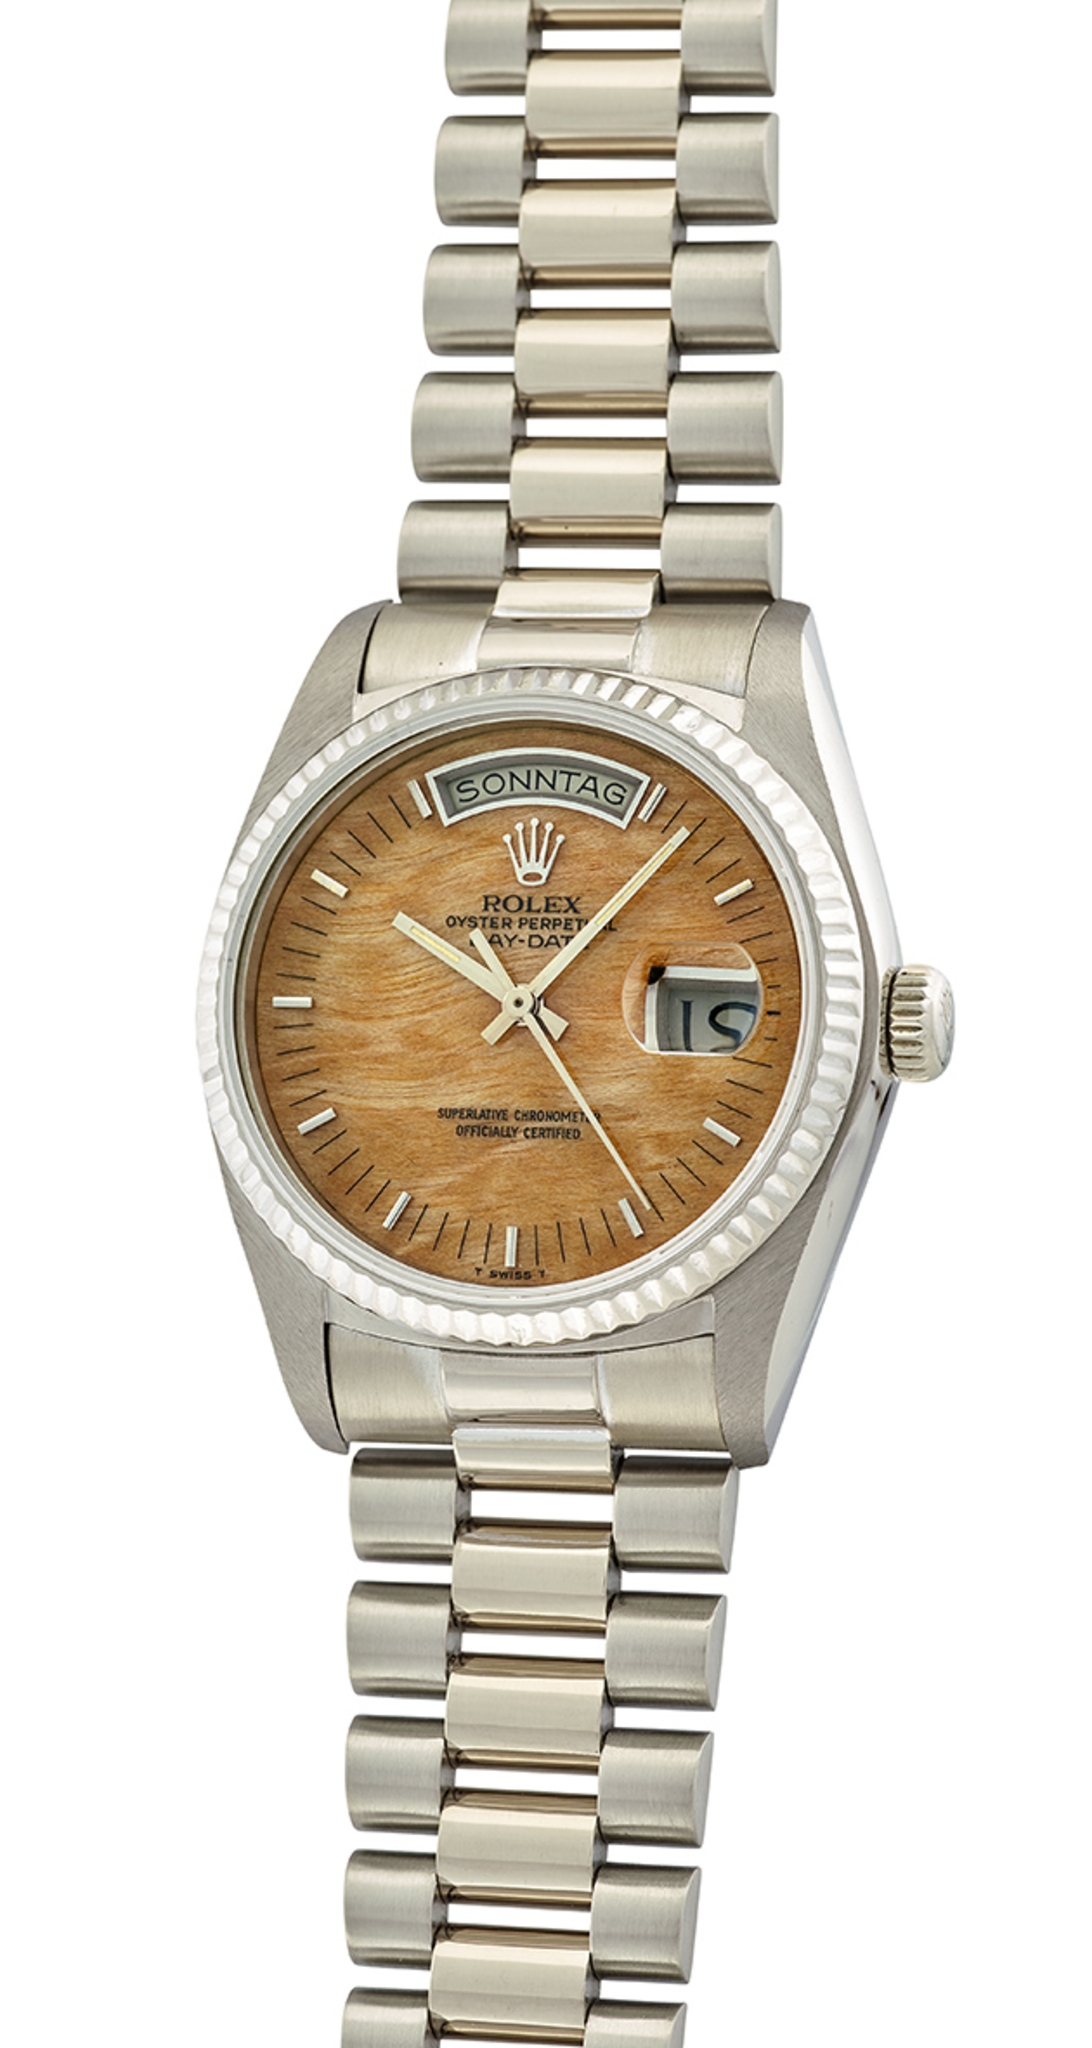 Đồng hồ Rolex Day-Date 18039 Mặt số gỗ